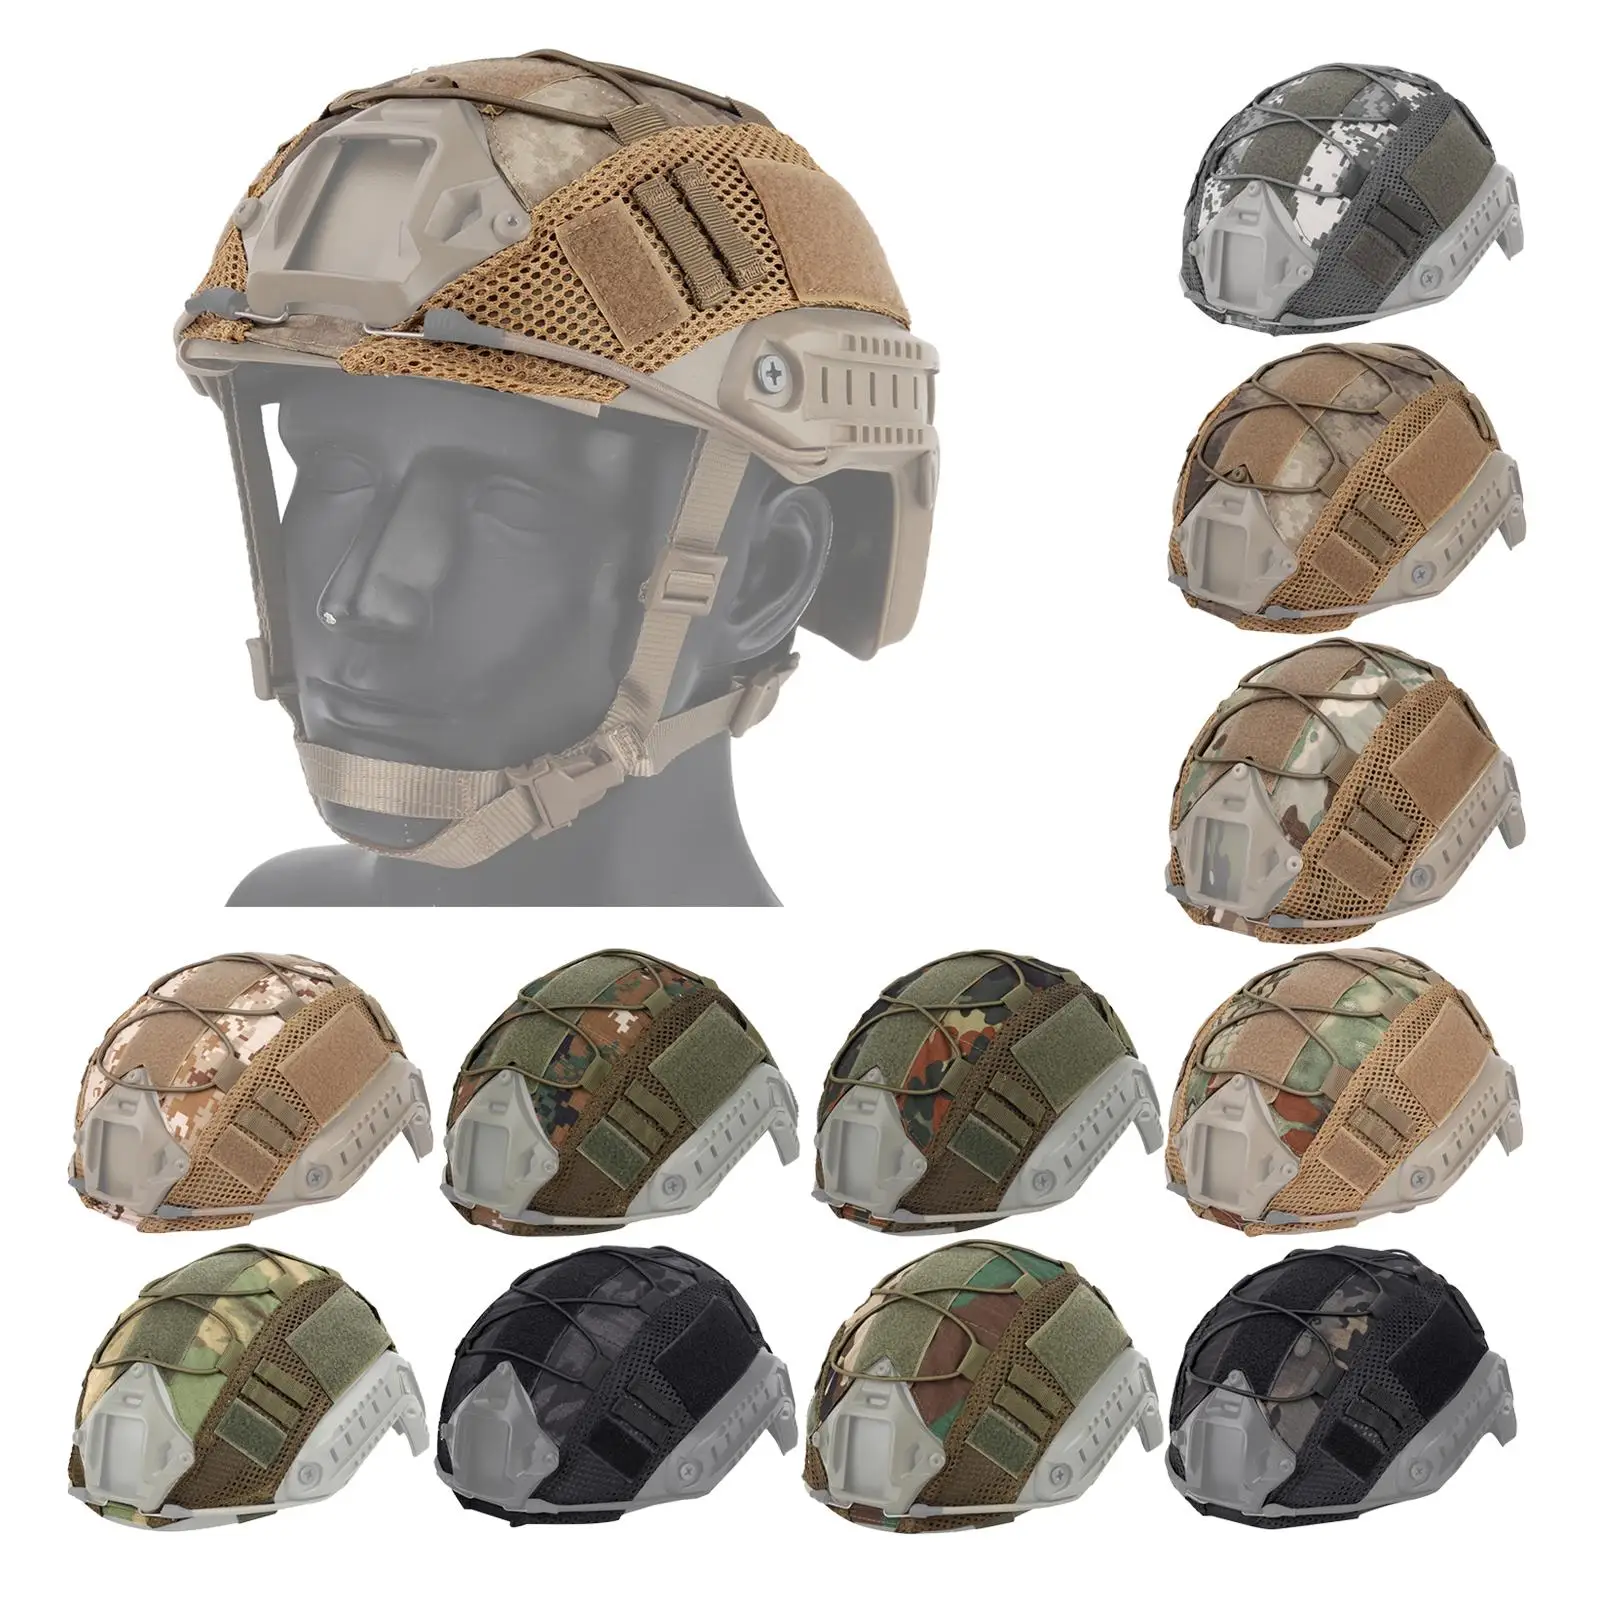 

Тактический чехол для шлема Fast MH PJ, аксессуары для страйкбола, пейнтбола, армейского шлема